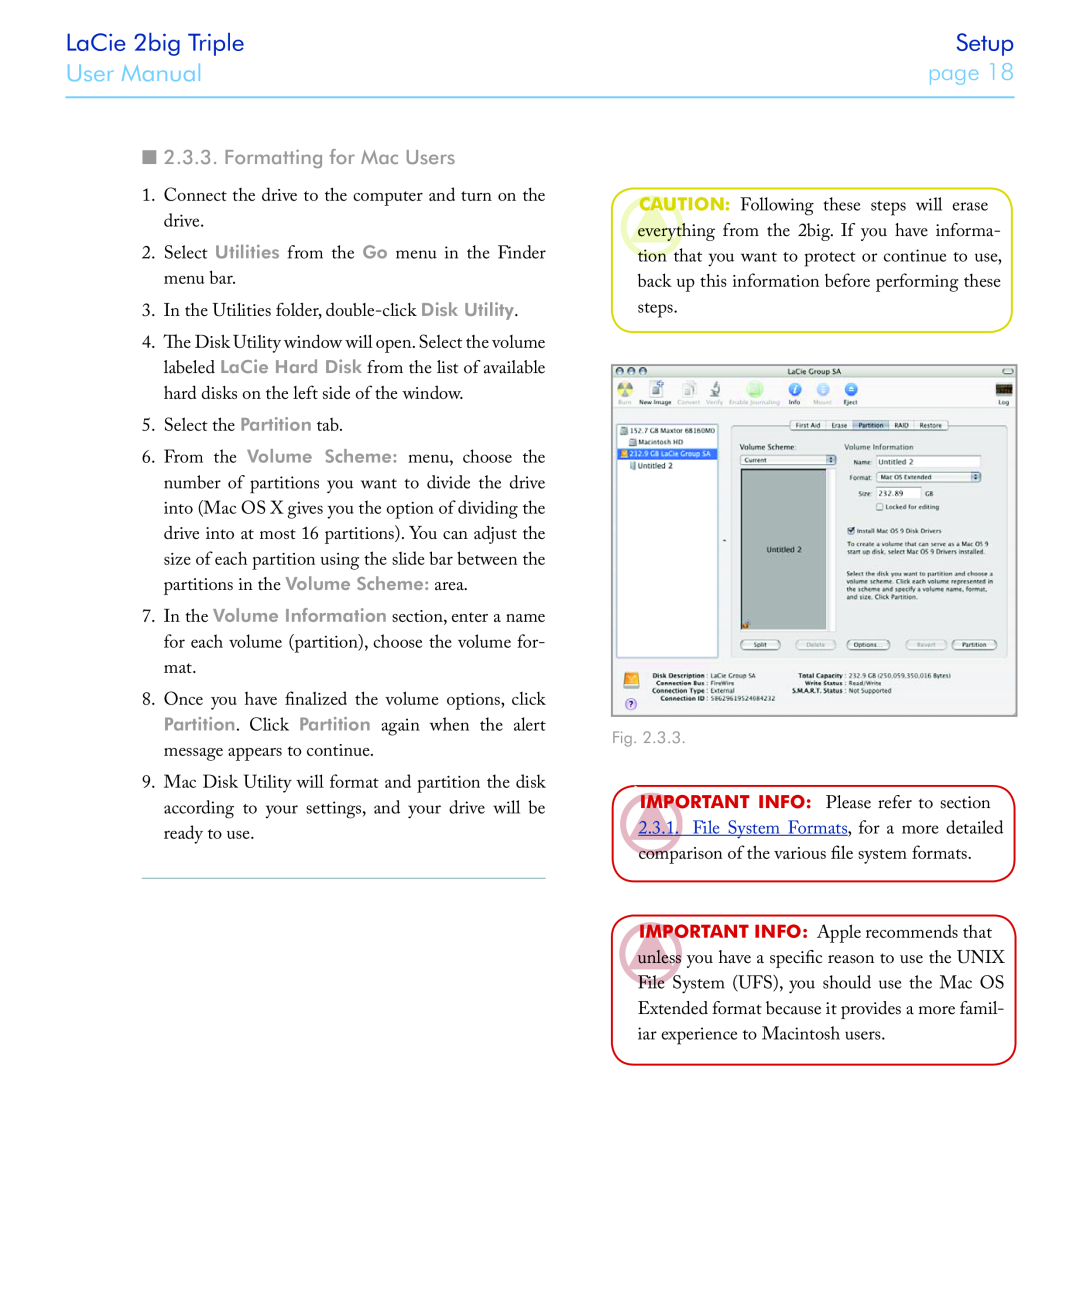 LaCie 2big triple manual Formatting for Mac Users, LaCie 2big Triple, Setup, User Manual, page 